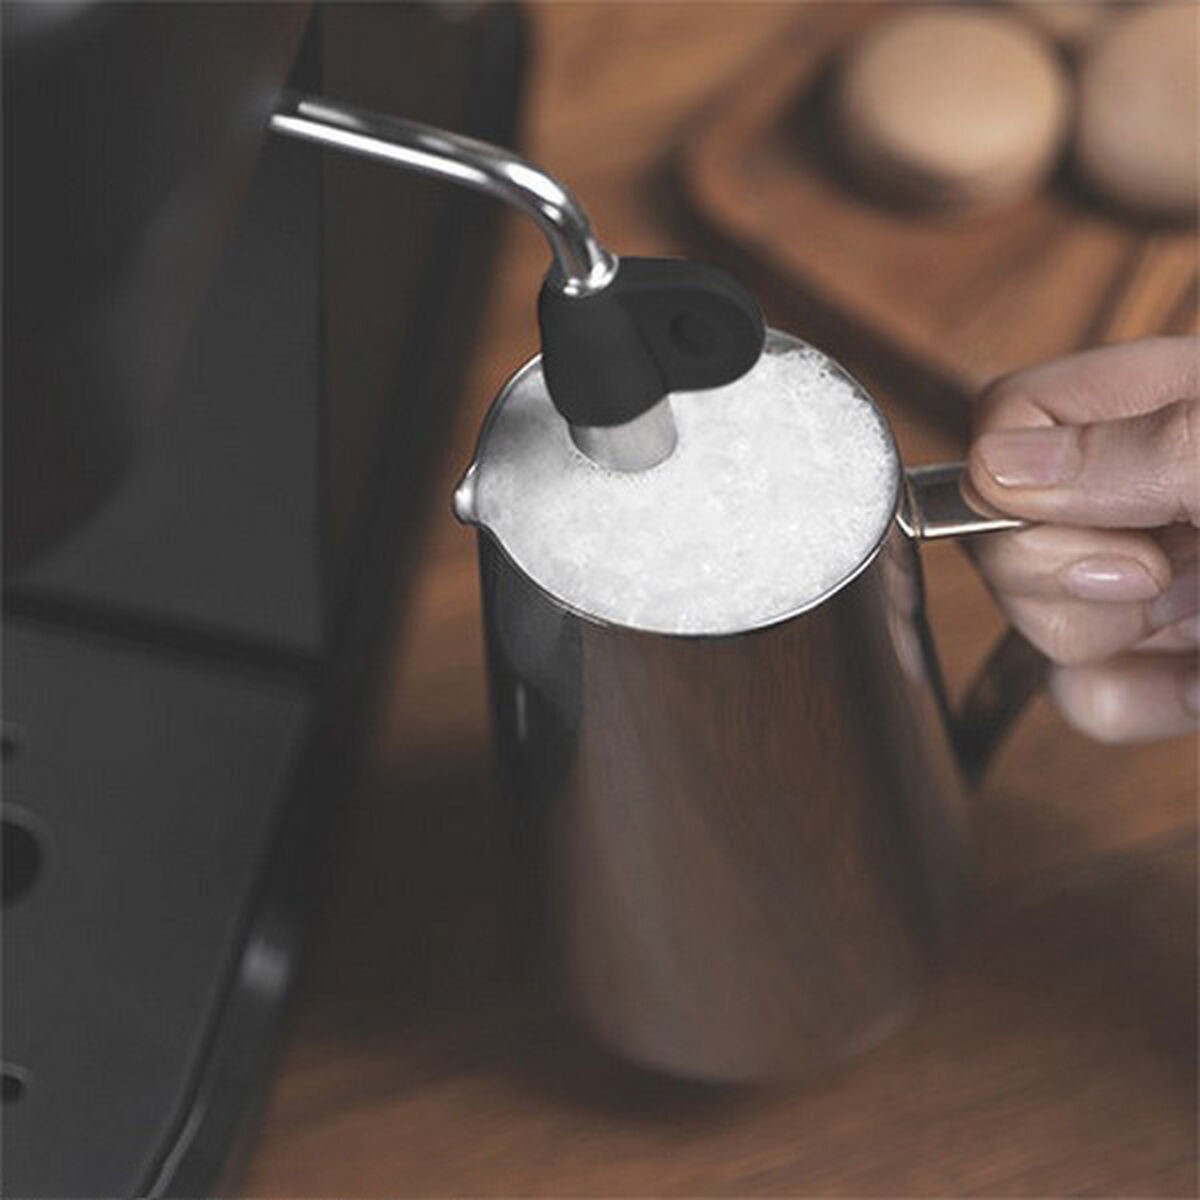 Express Manual Coffee Machine Cecotec Cafelizzia 790 Black Pro 1,2 L